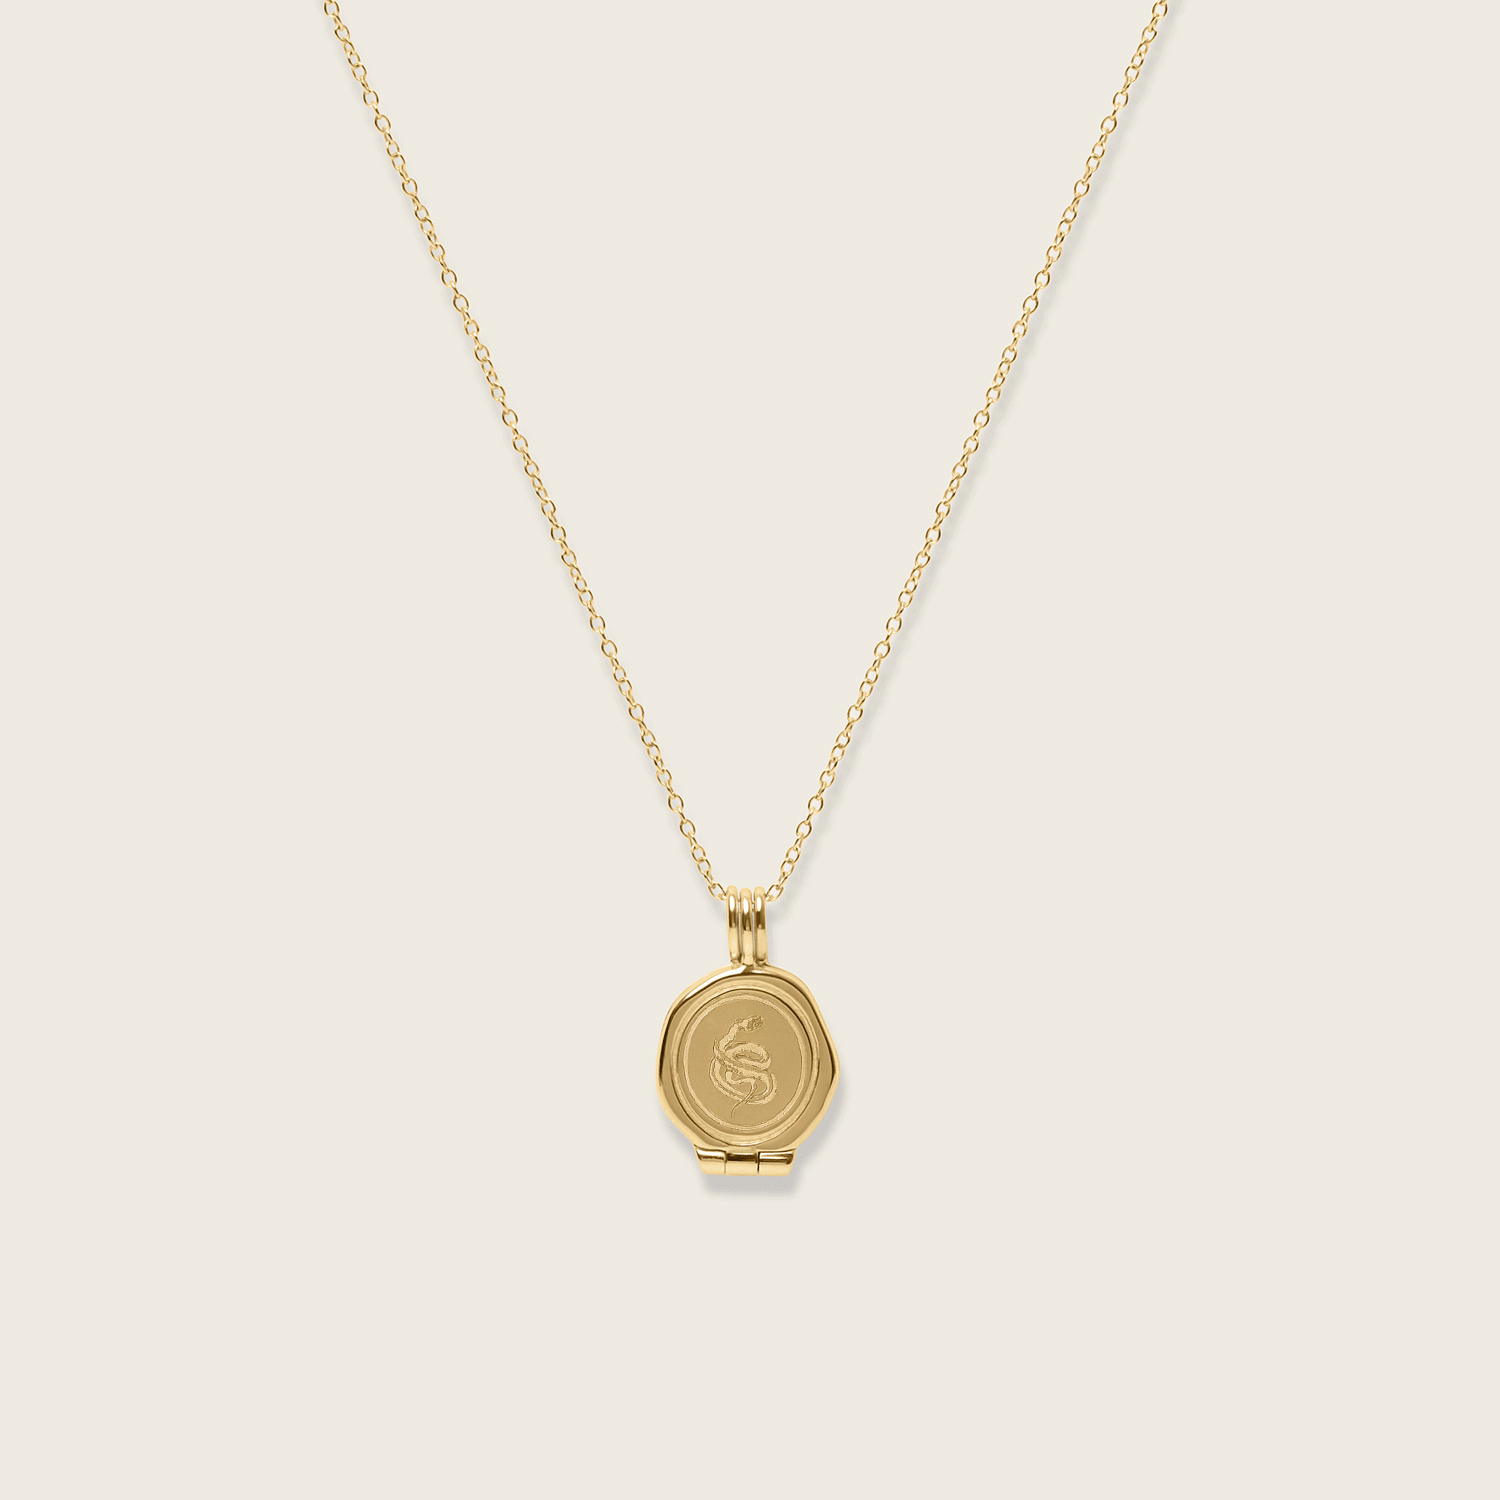 Nouveau Flower Seal Locket Necklace 14k Solid Gold